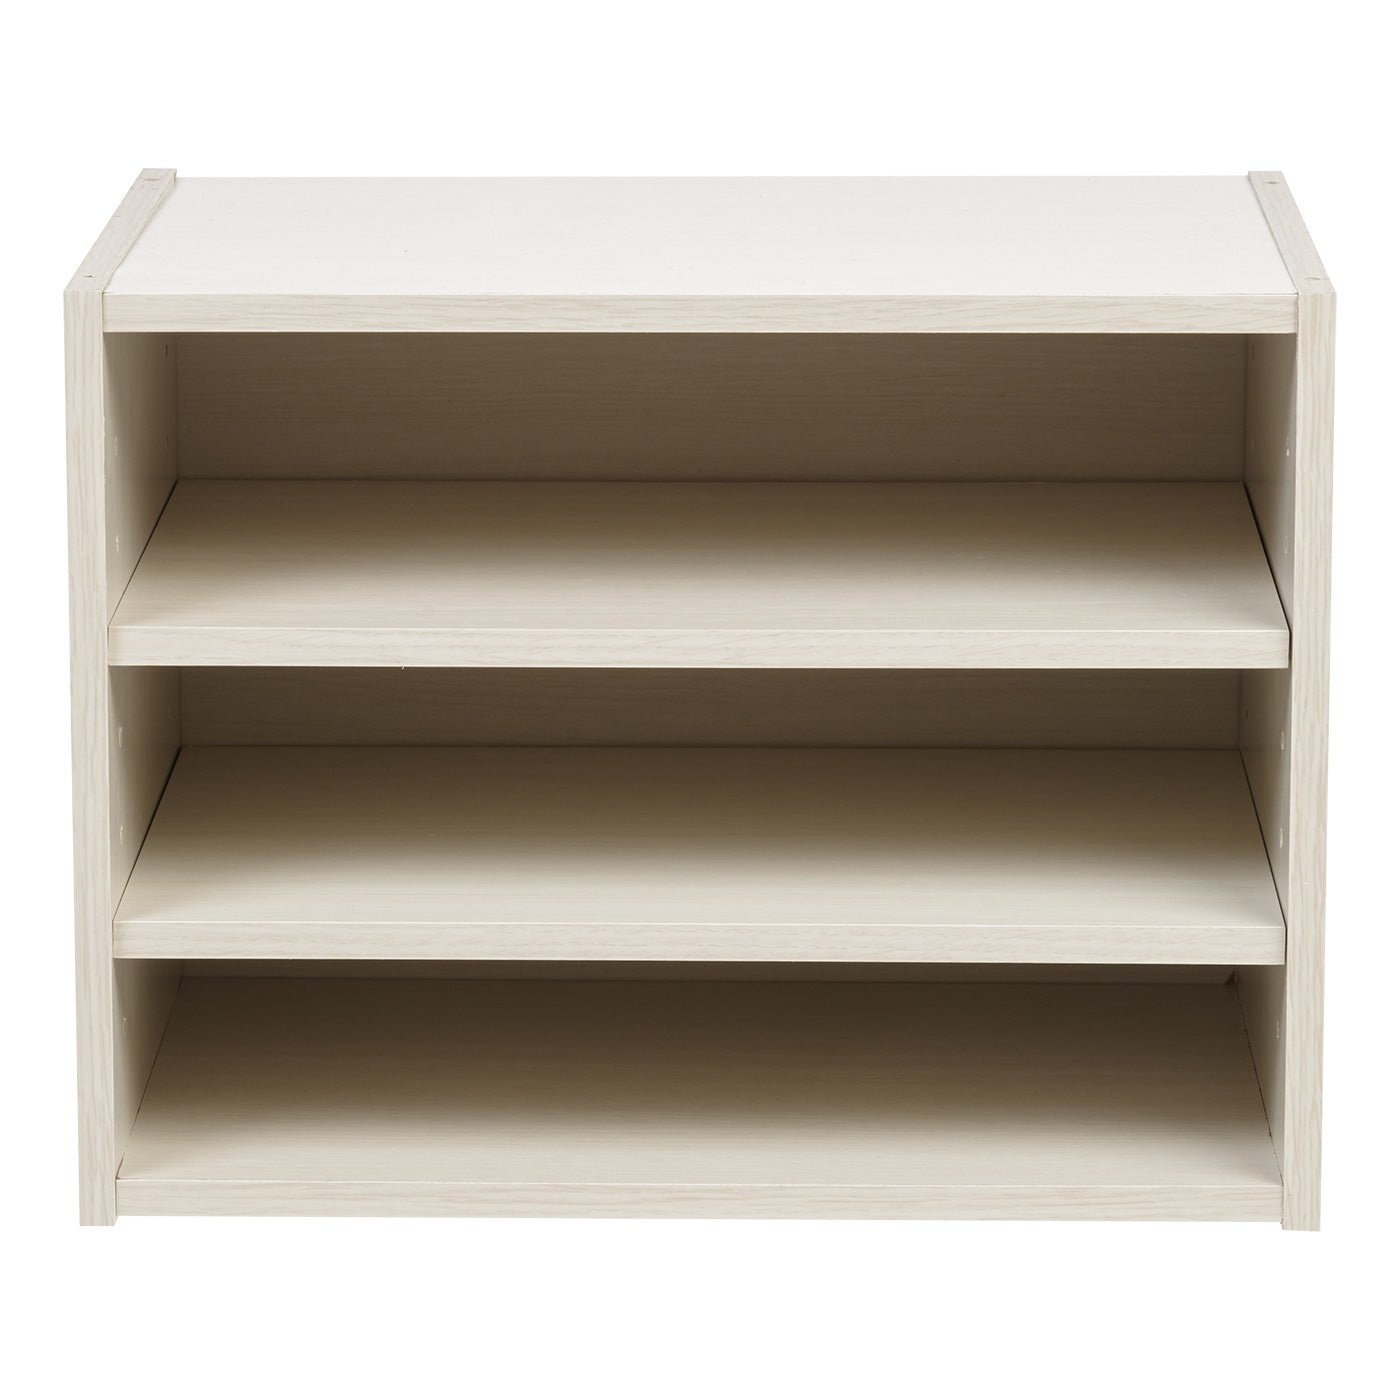 IRIS USA 2-Tier Shelf Organizer with Easy Access Angled Cubby, White